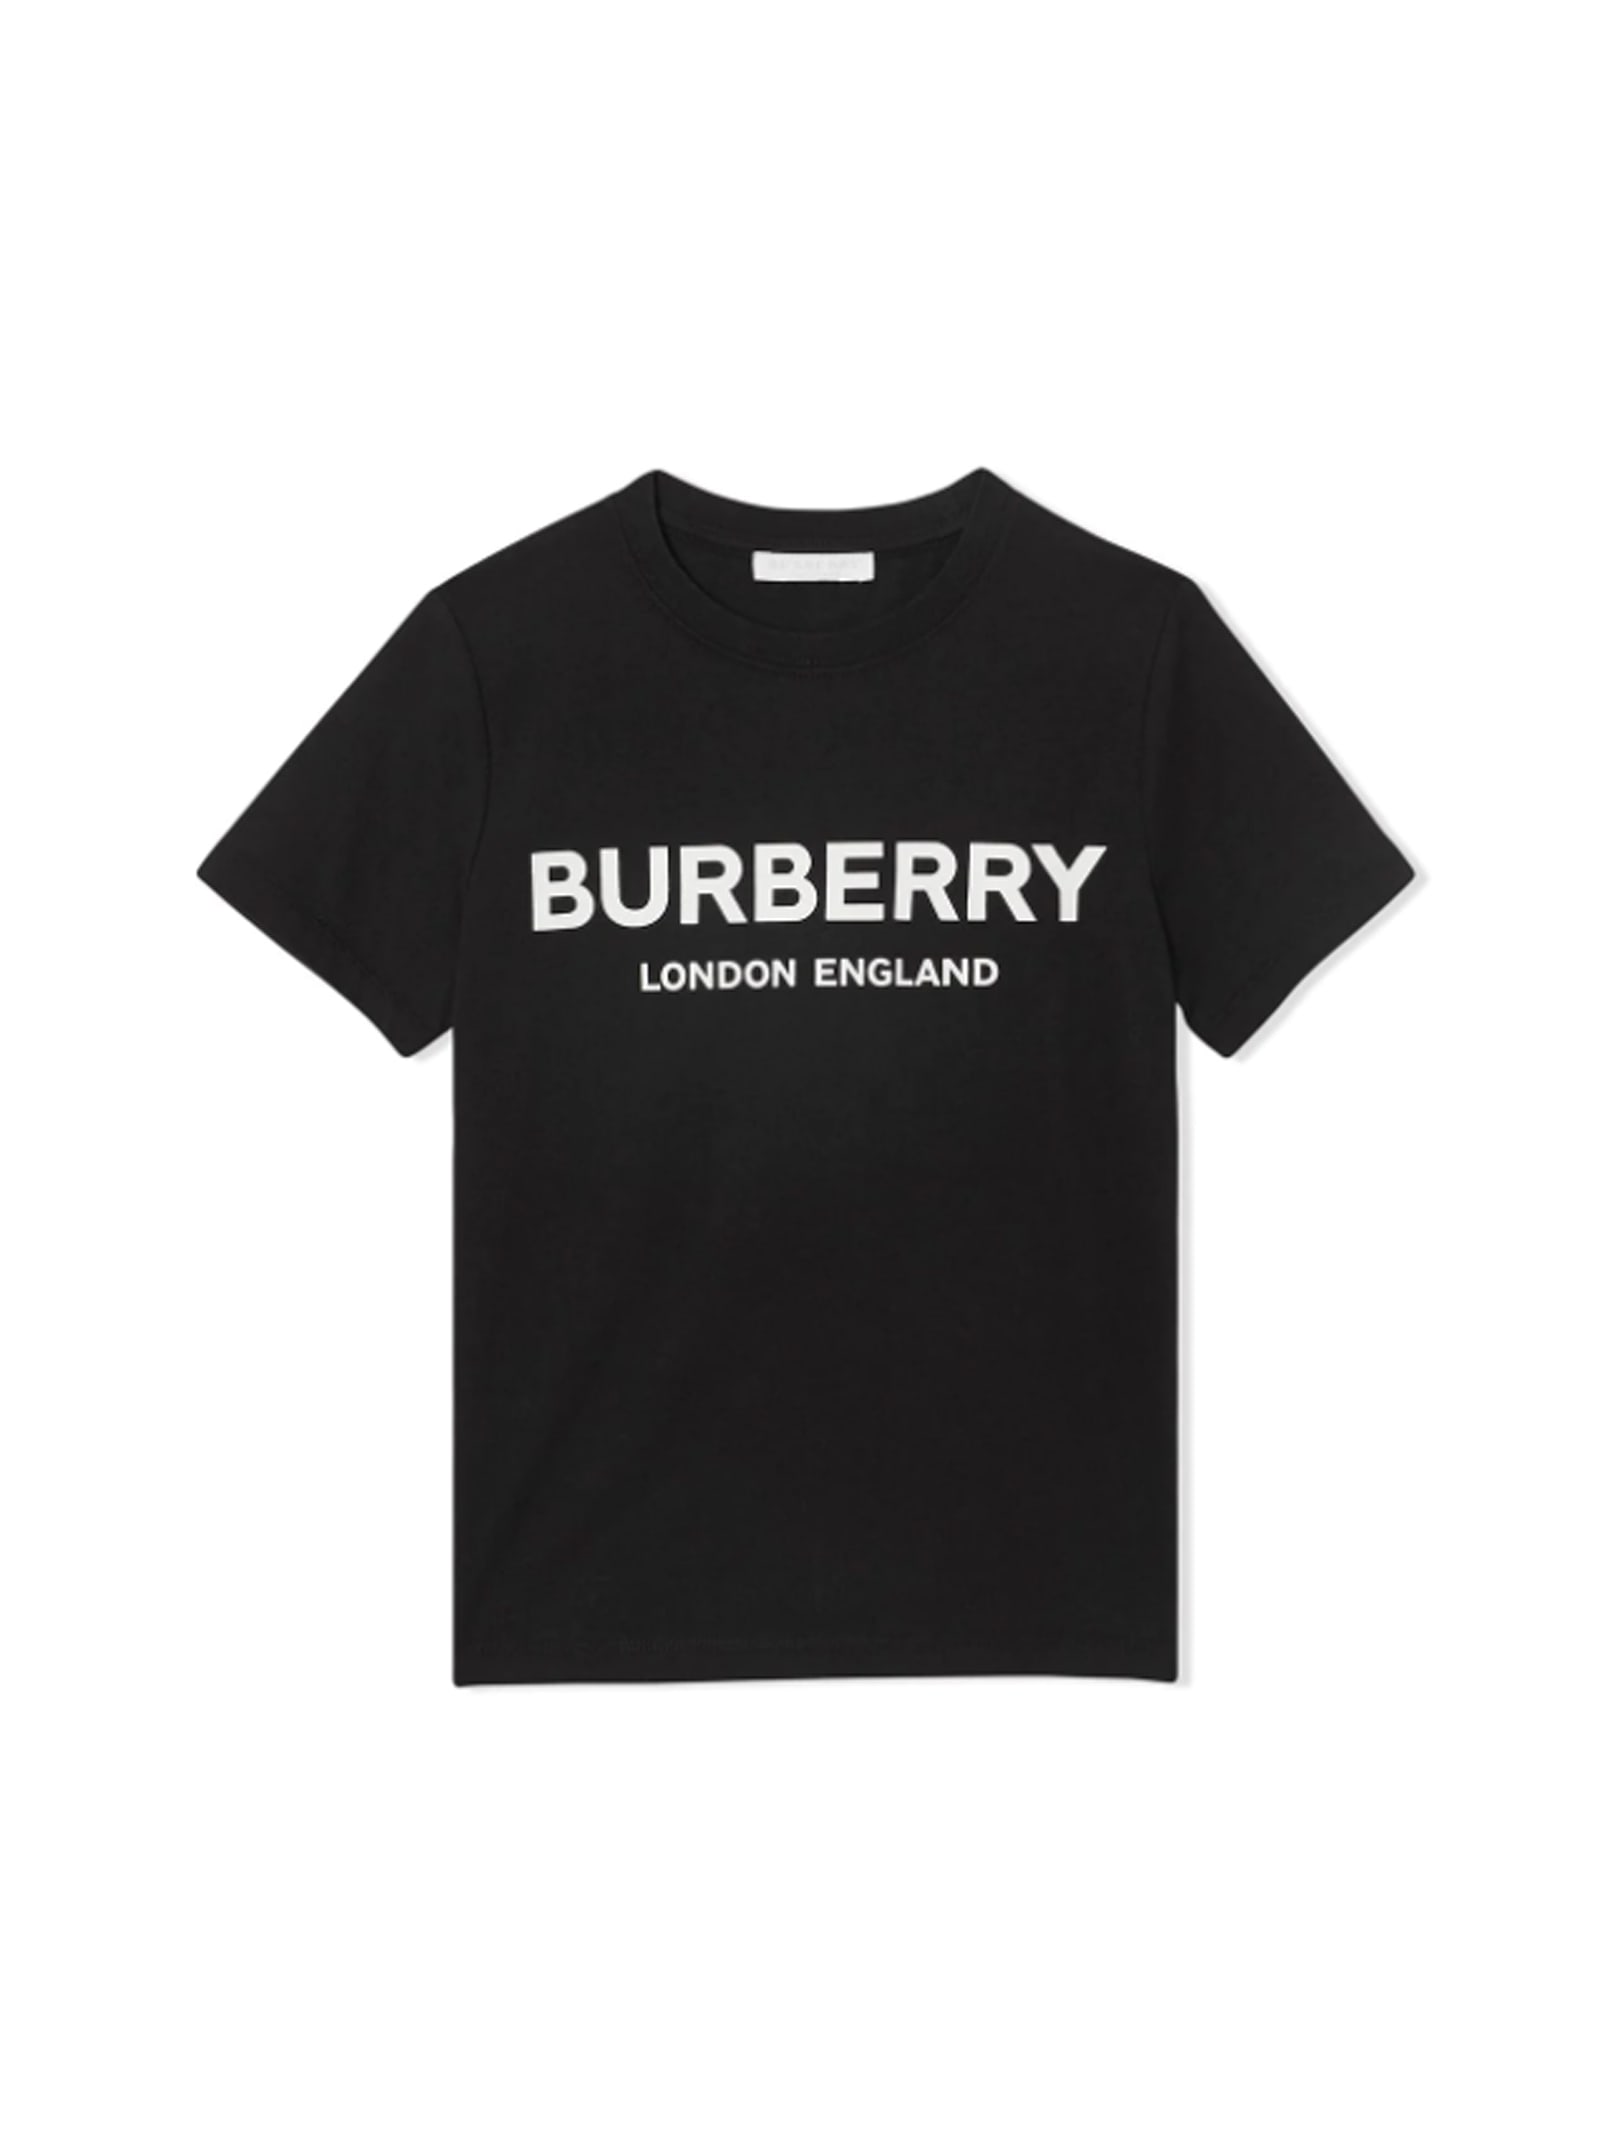 burberry tee shirt sale